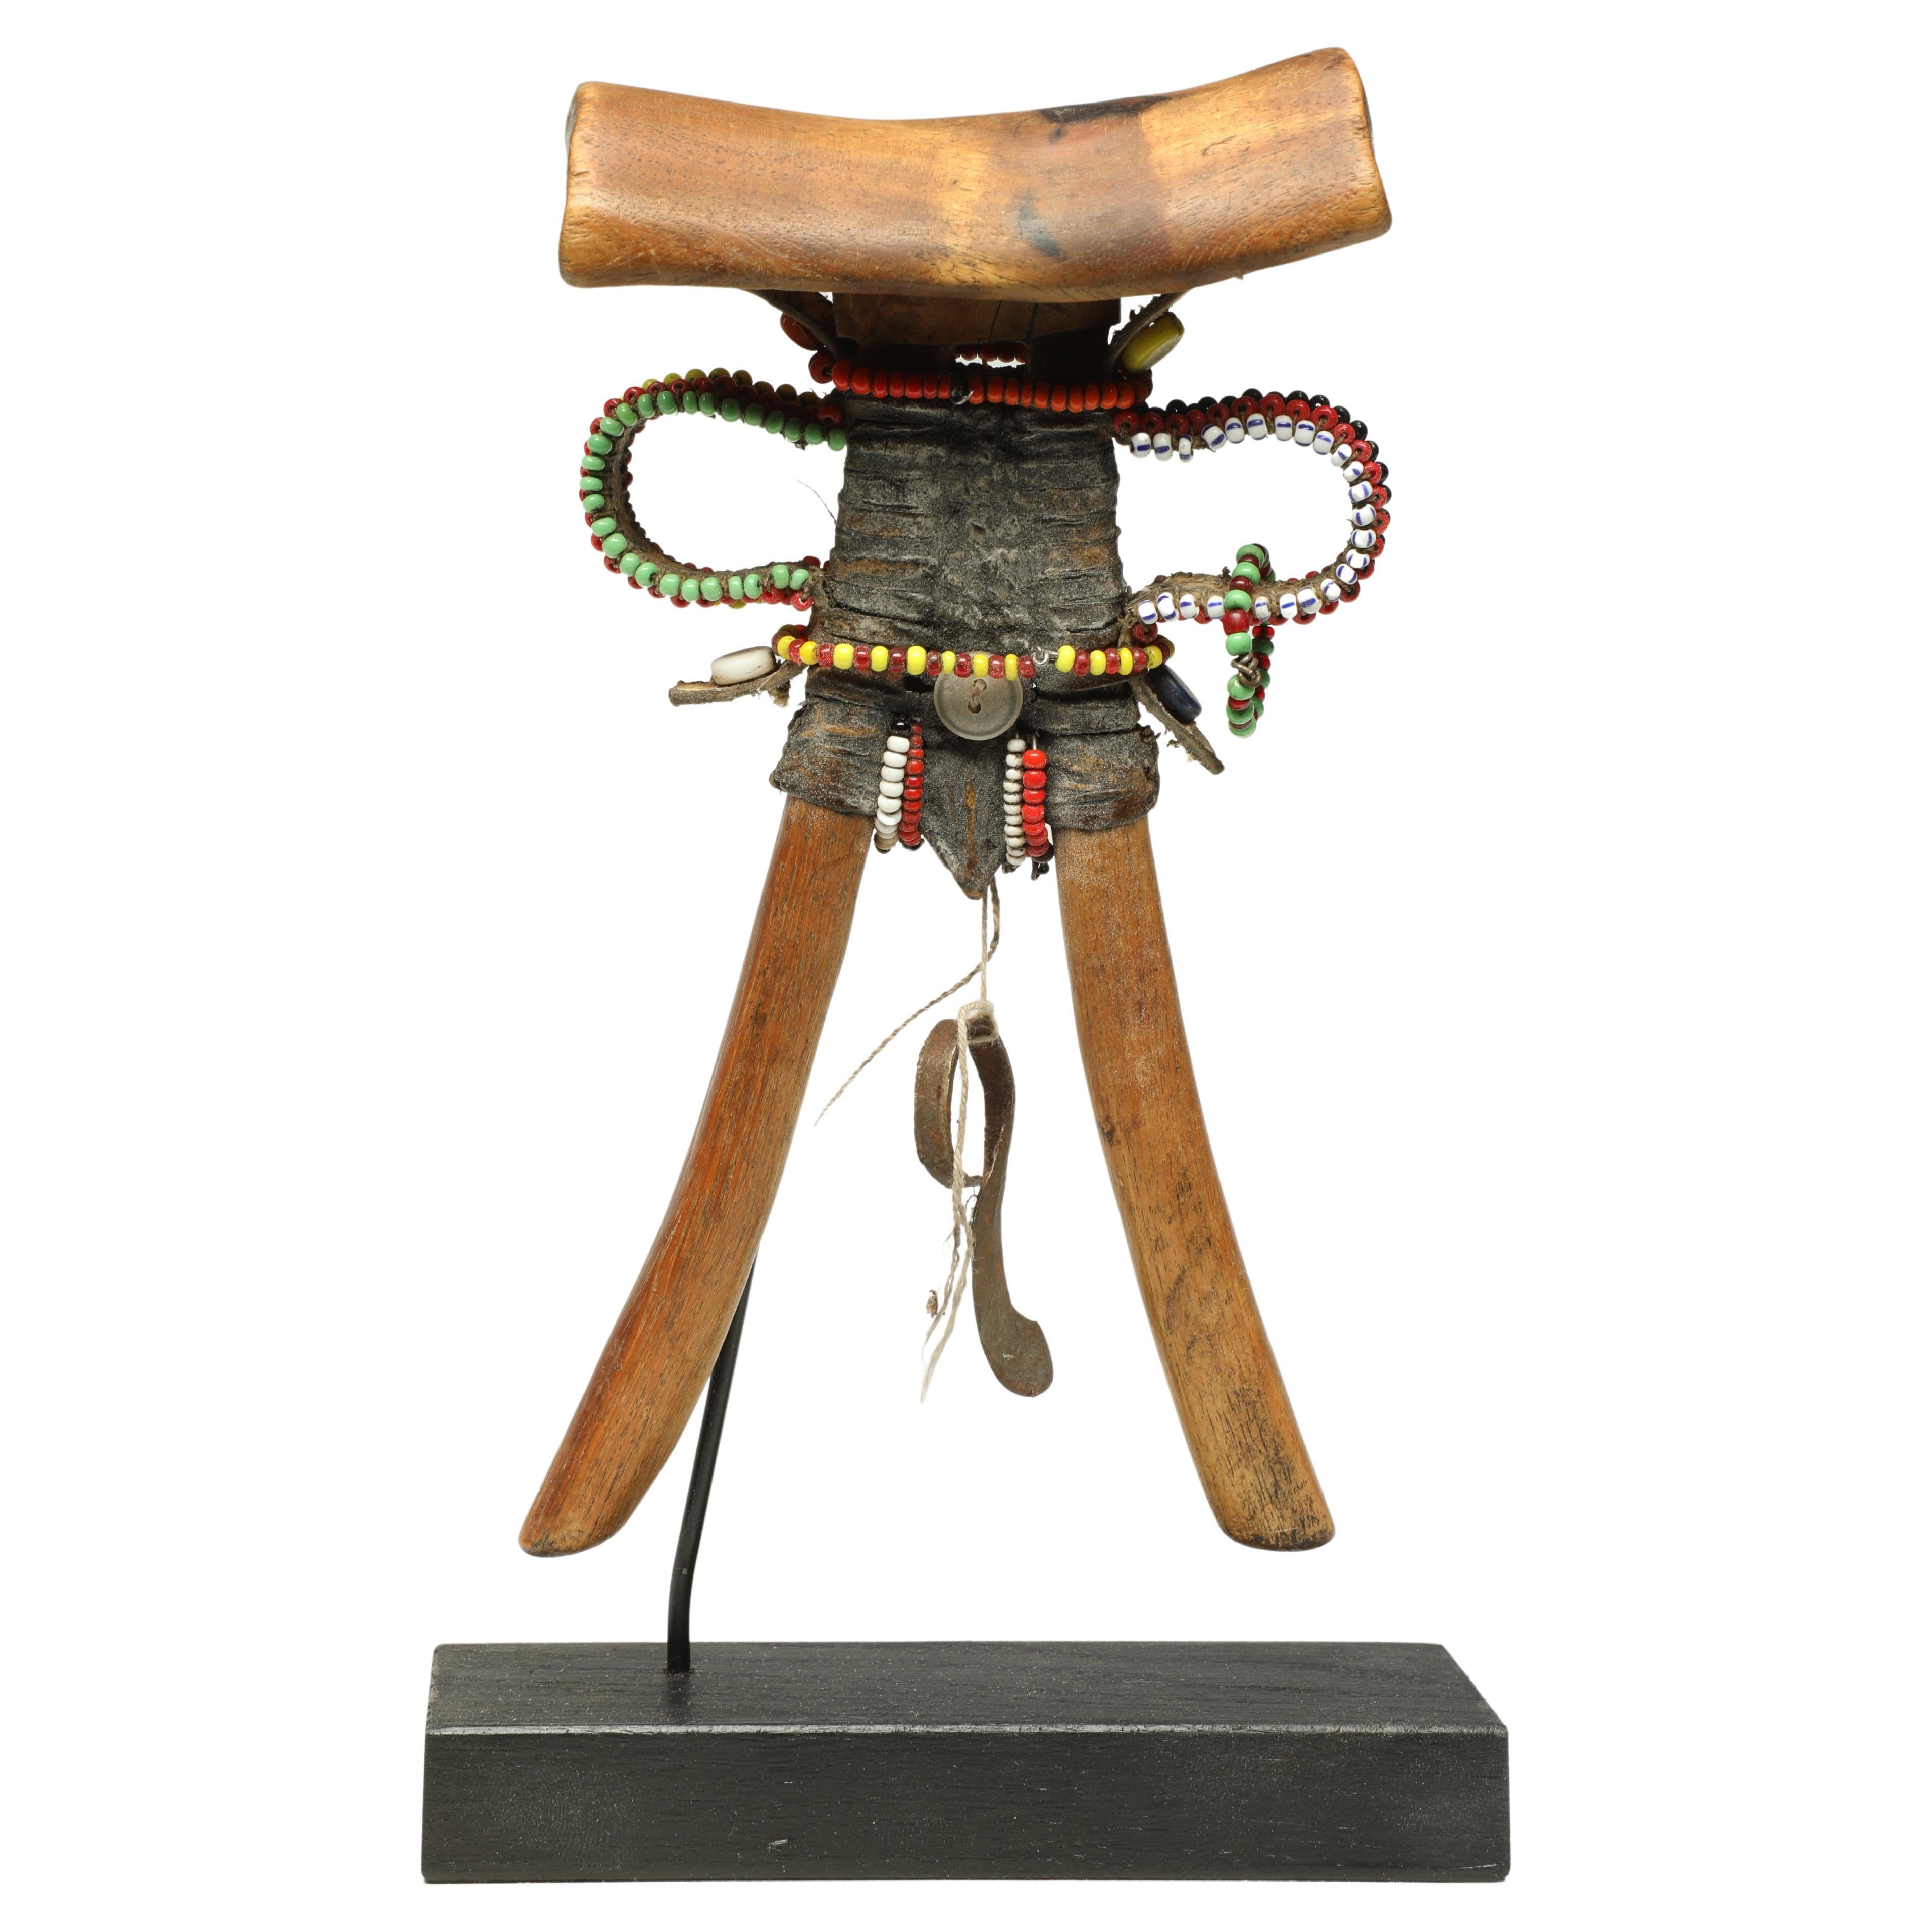 Turkana Tribal Wood Headrest, Stylized Human Form, African Beaded Attachments